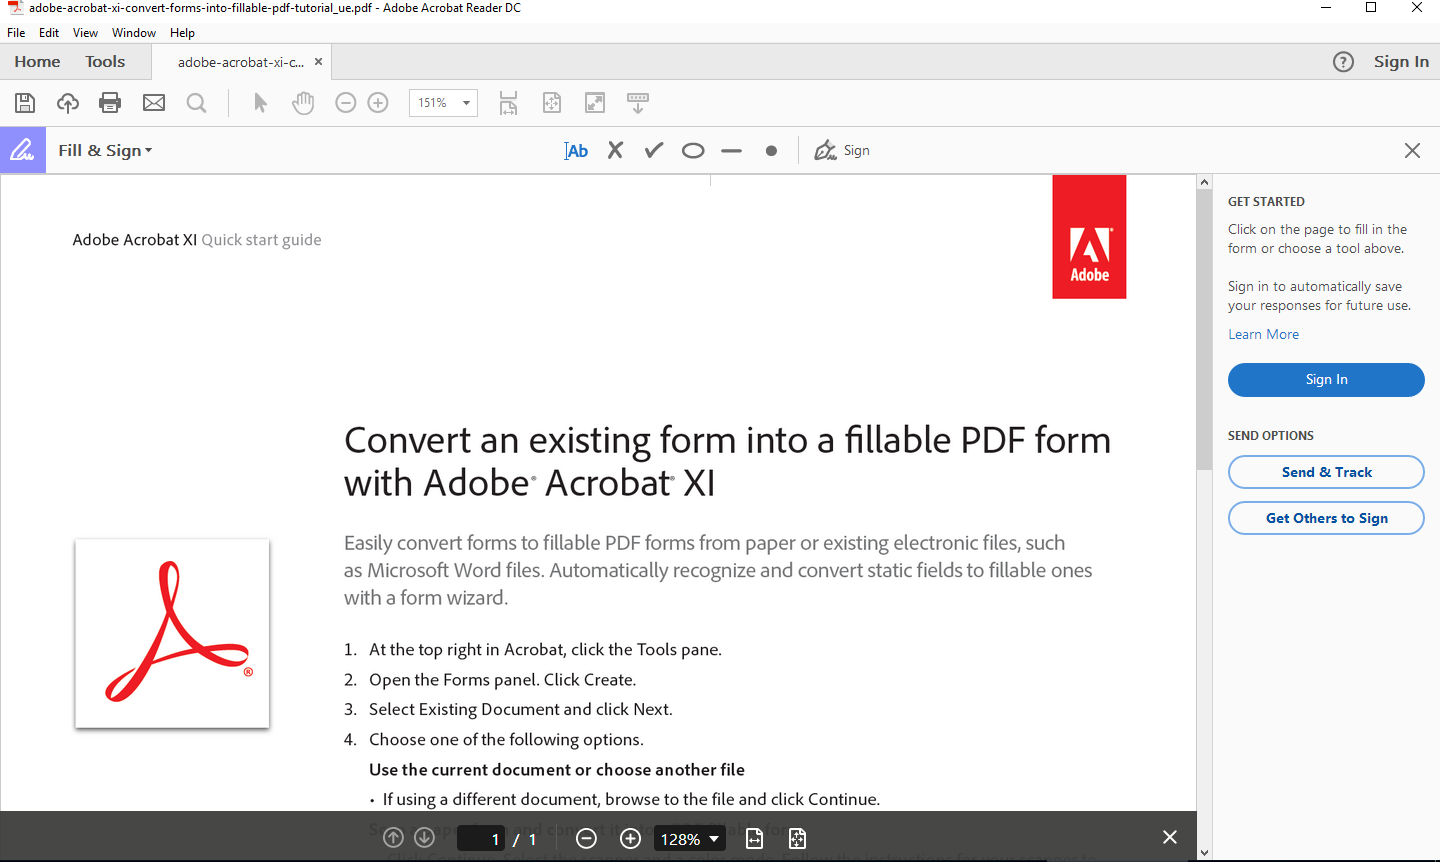 Adobe Acrobat Reader latest version Free Download ...